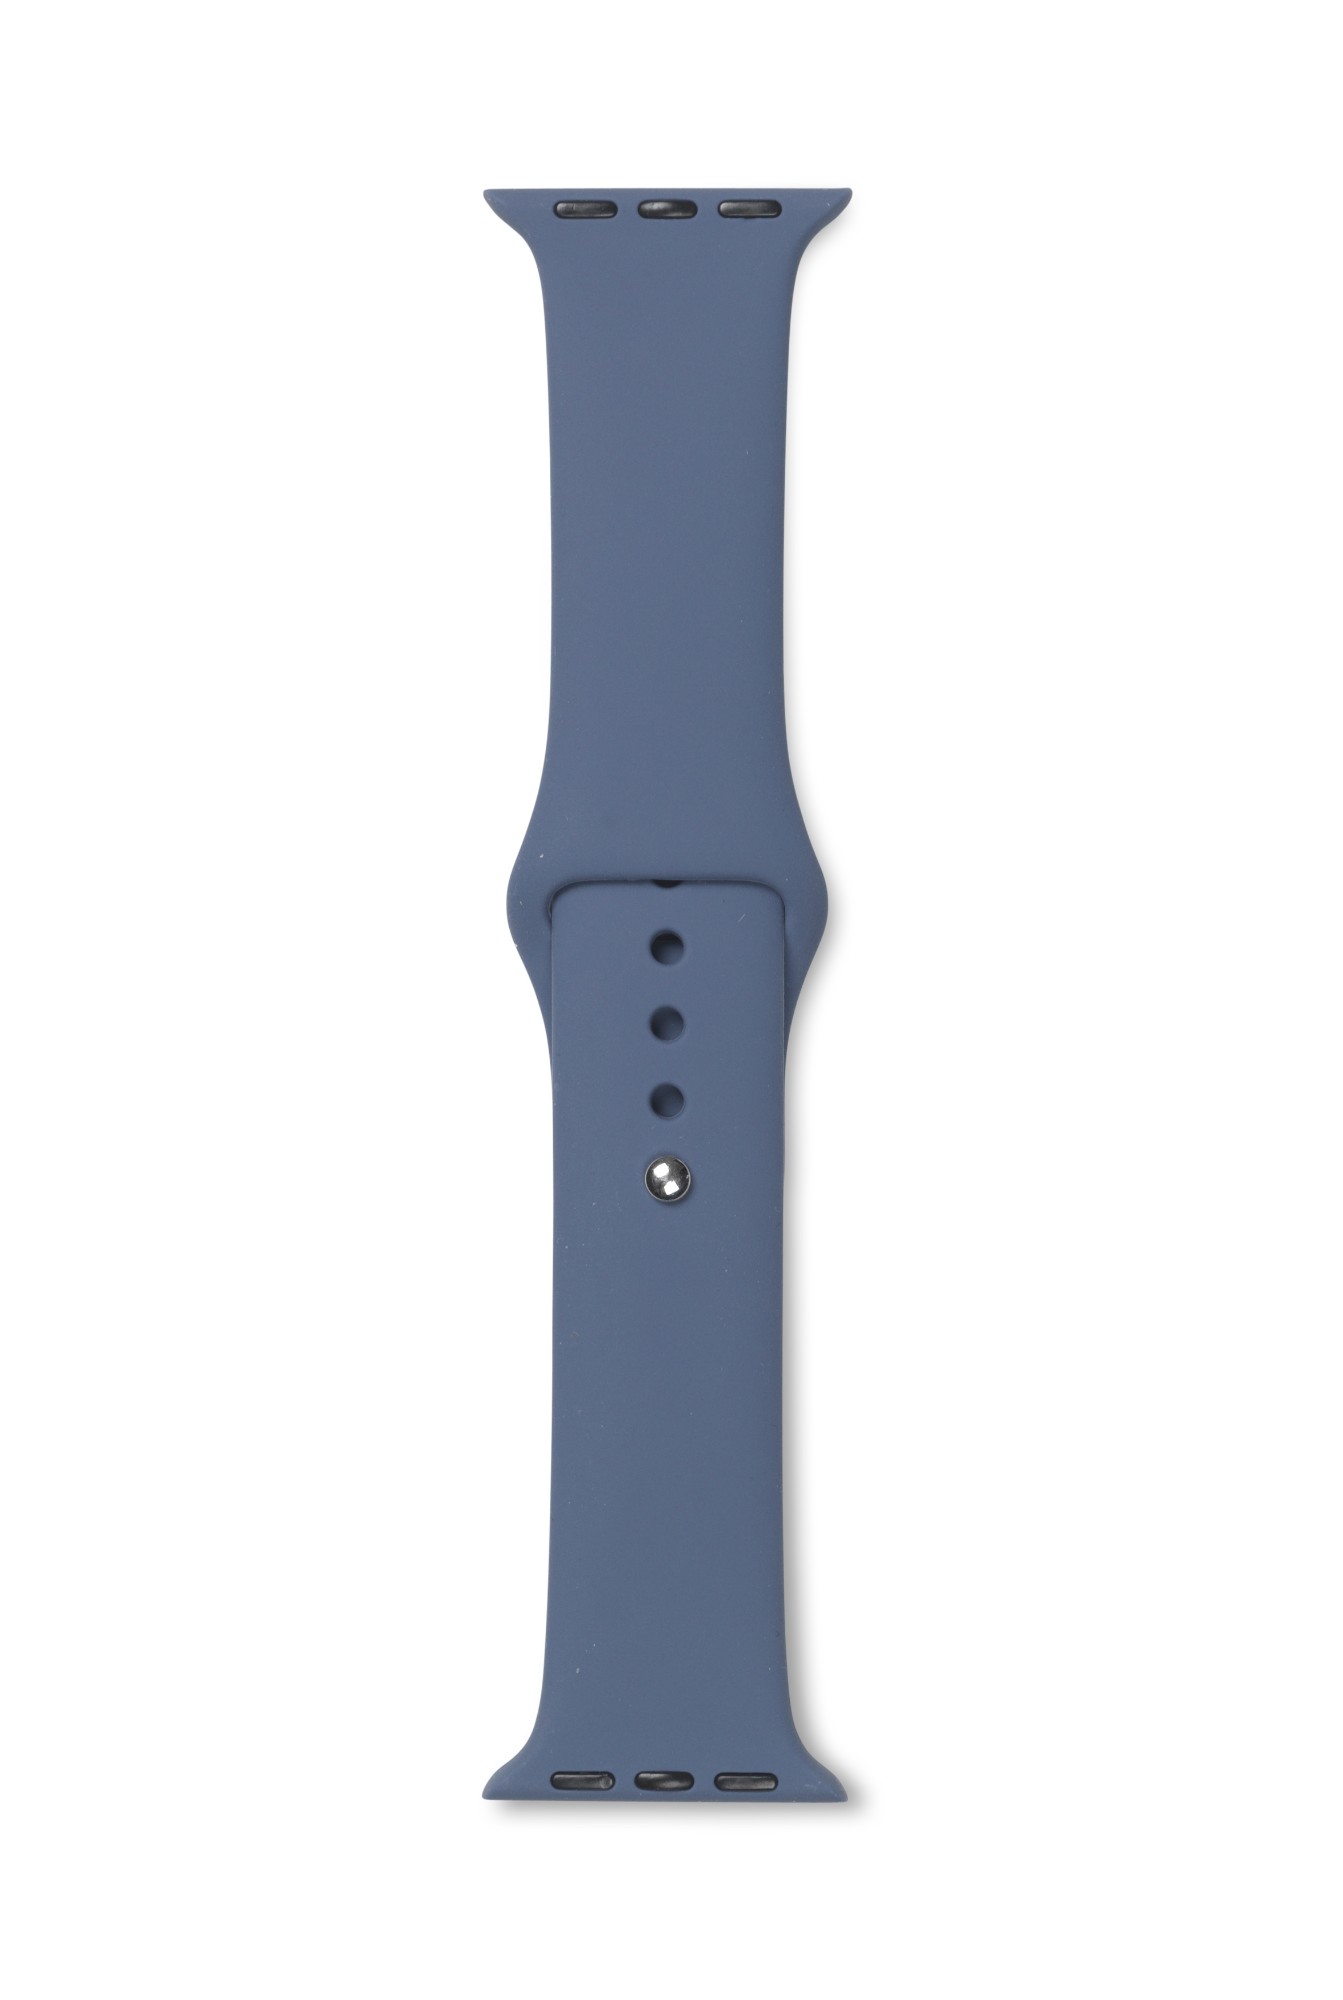 eSTUFF Apple Silicone Watch Band Blue